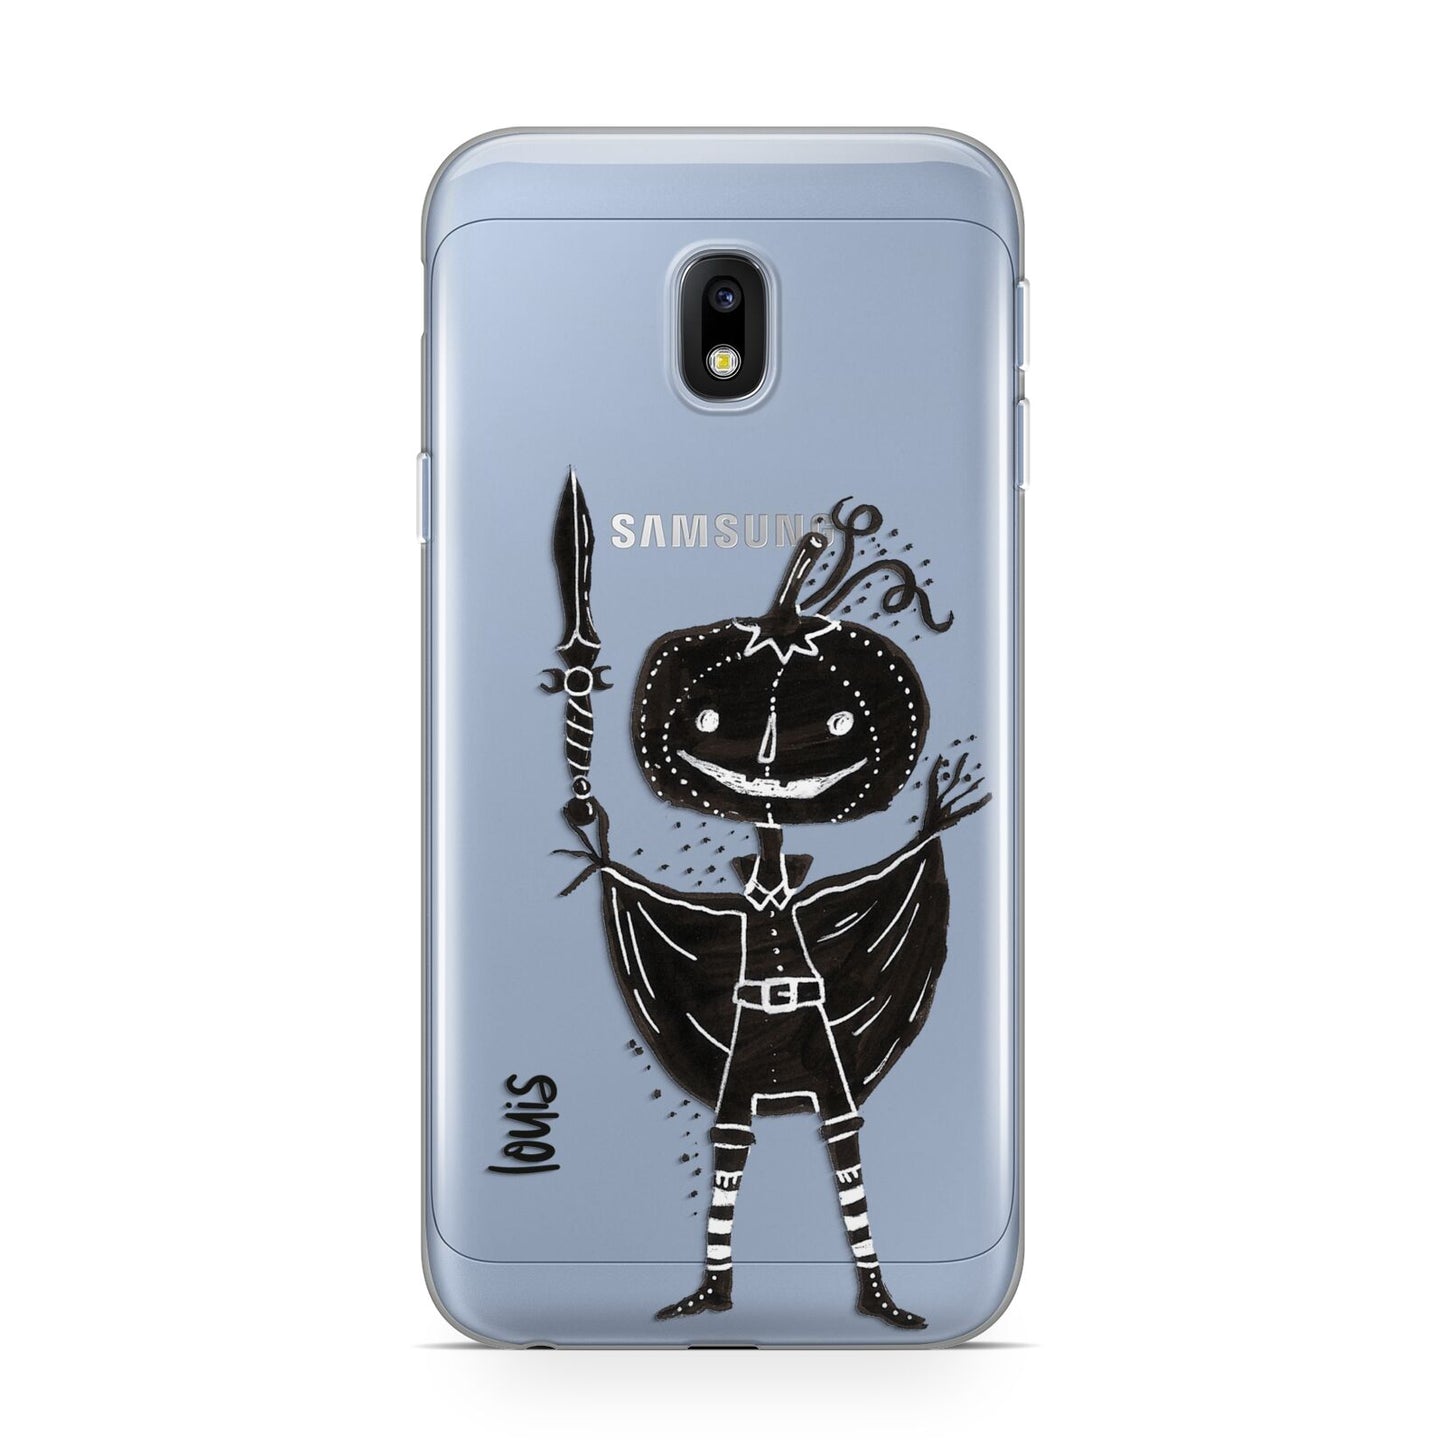 Pumpkin Head Personalised Samsung Galaxy J3 2017 Case